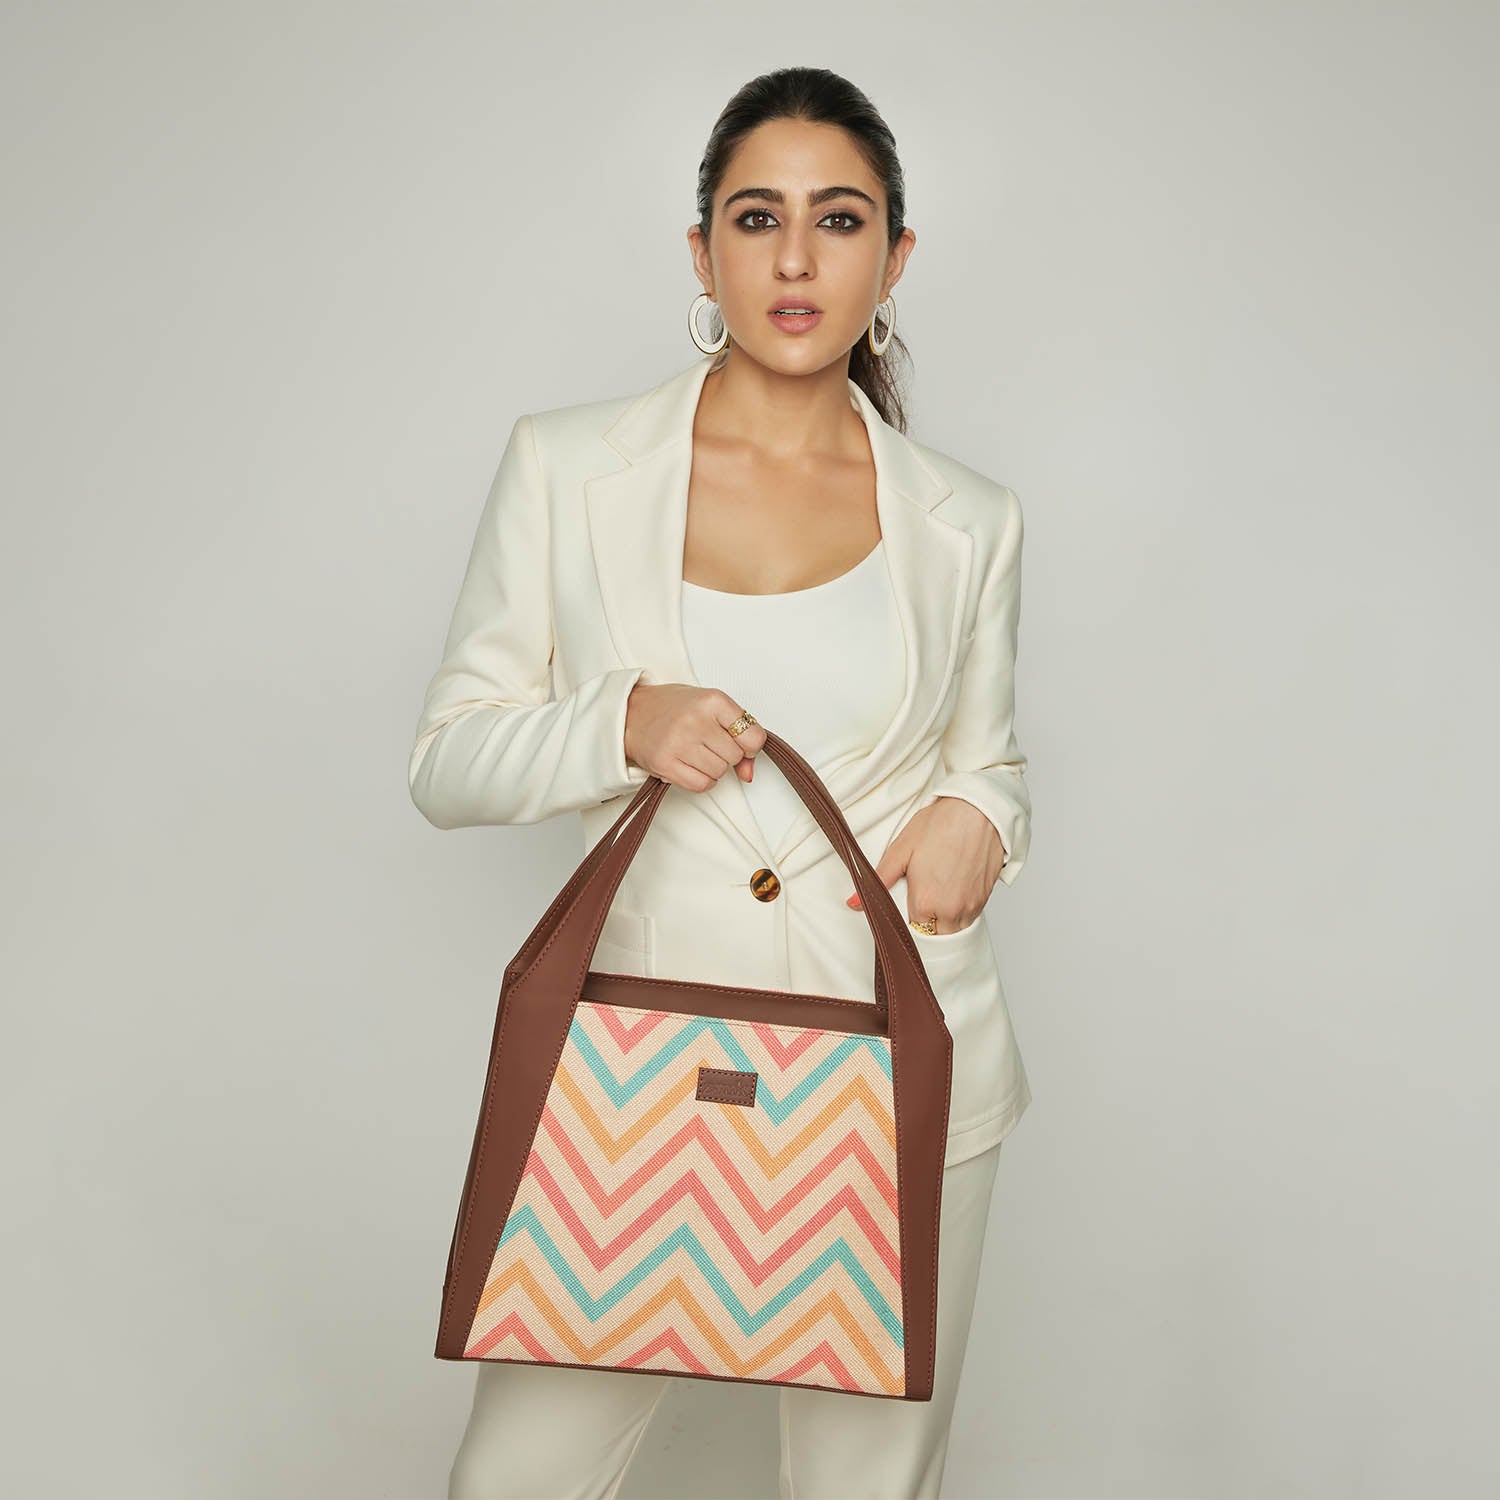 Buy Sling Bags & Handbags for Women Online - Westside – Page 2